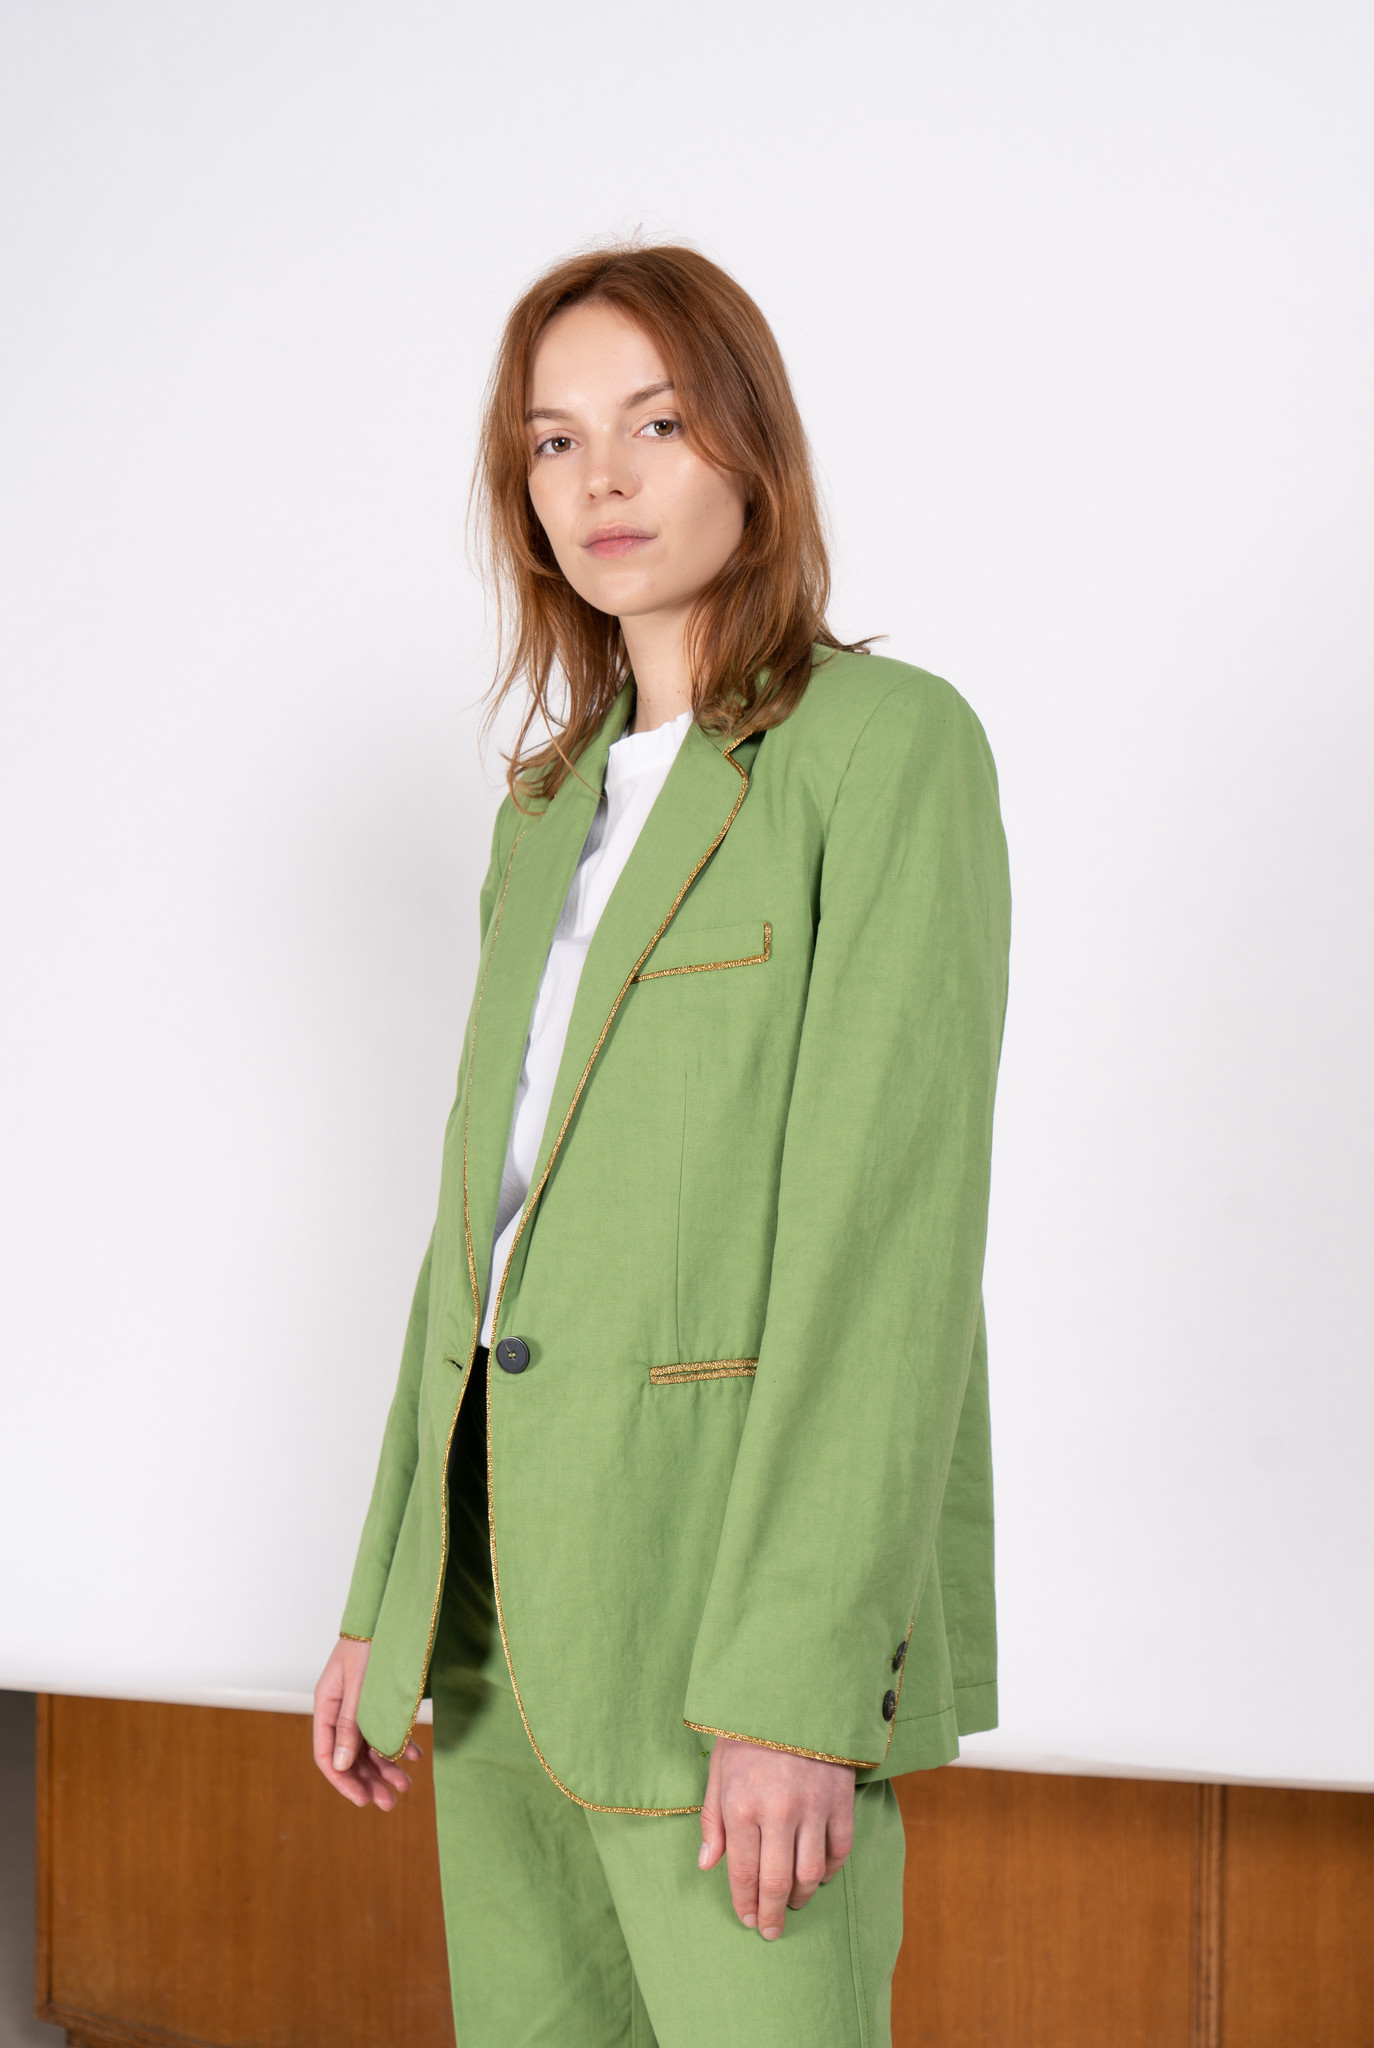 Cotton linen twill sartortial jacket Green